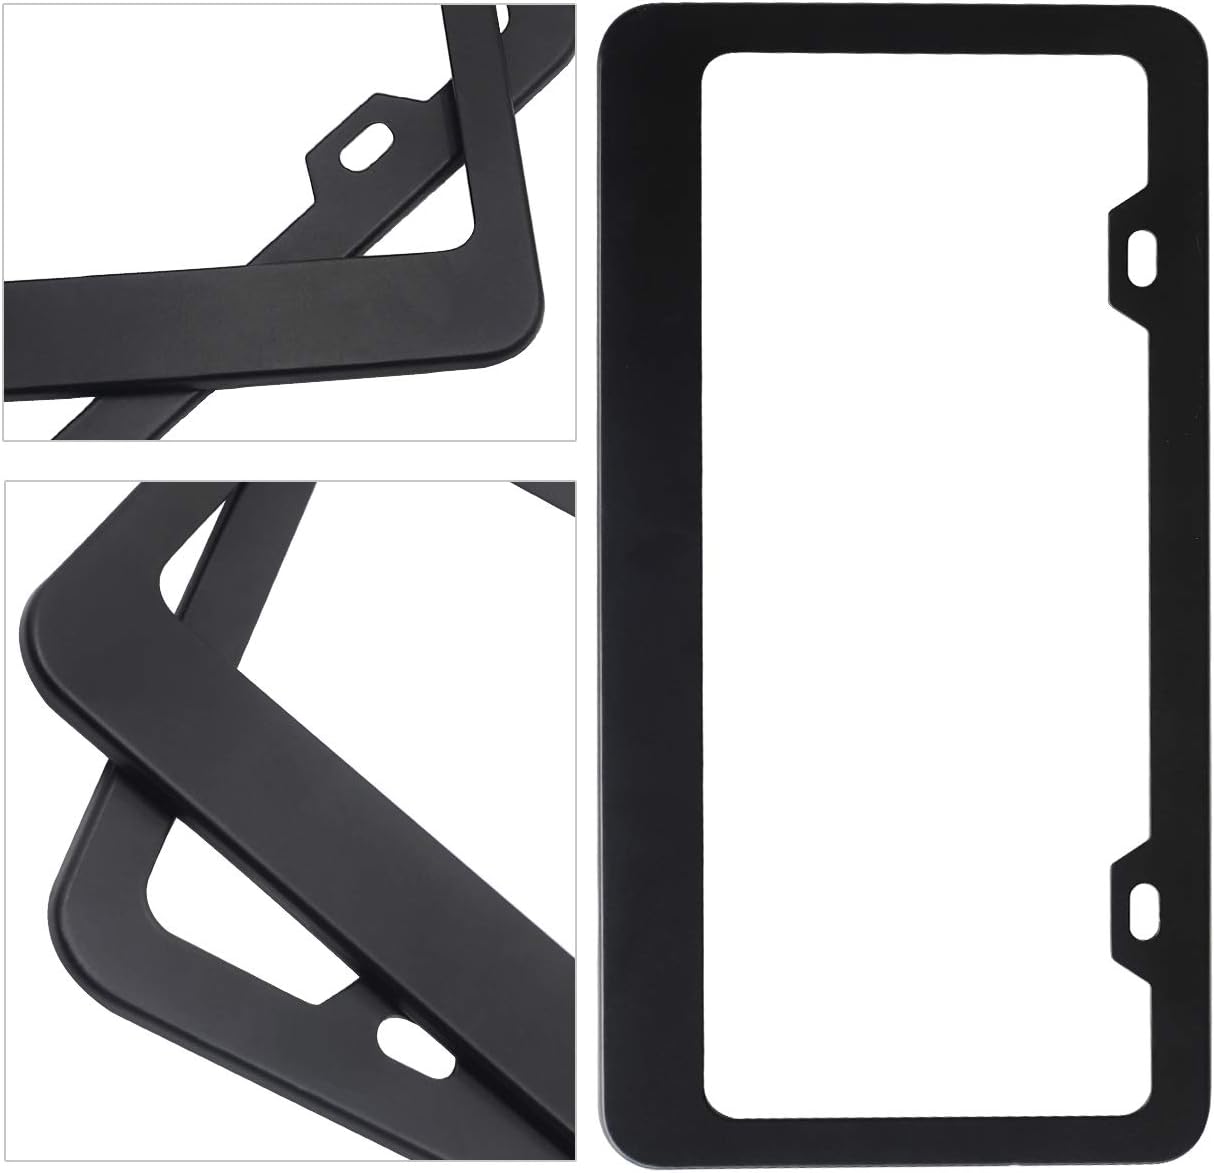 ZELEMO 2Pcs 2 Holes Black Matte Aluminum License Plate Frames Fits All Standard 6x12 Inches US License Plates Includ Screws.